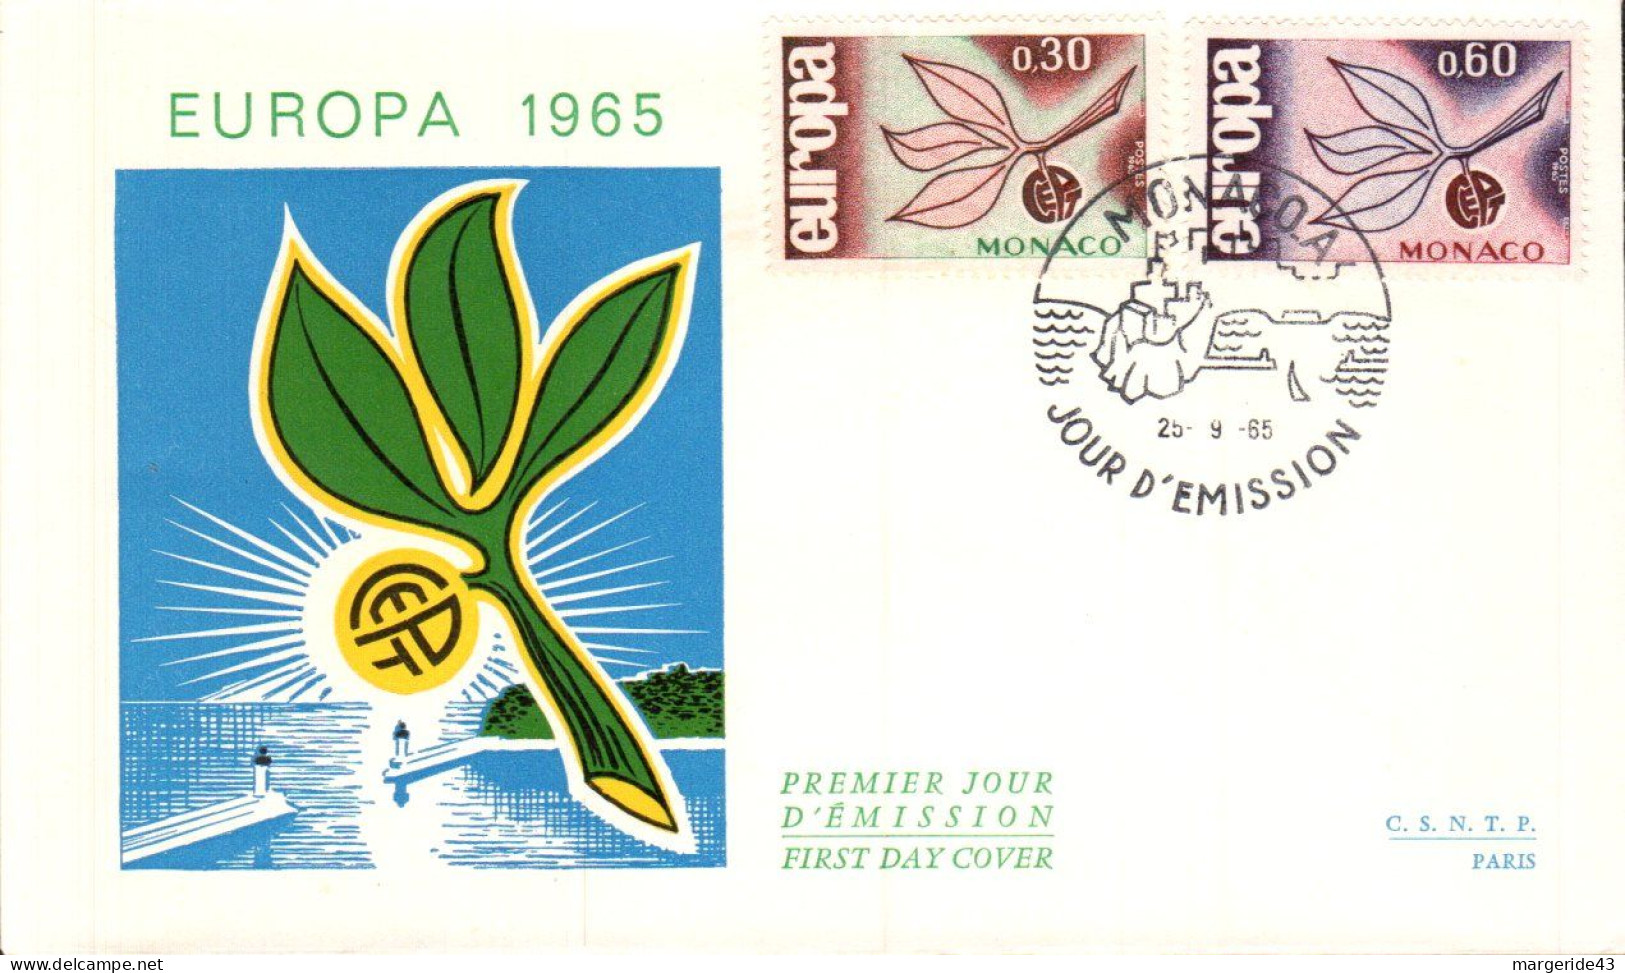 EUROPA 1965 MONACO FDC - 1965